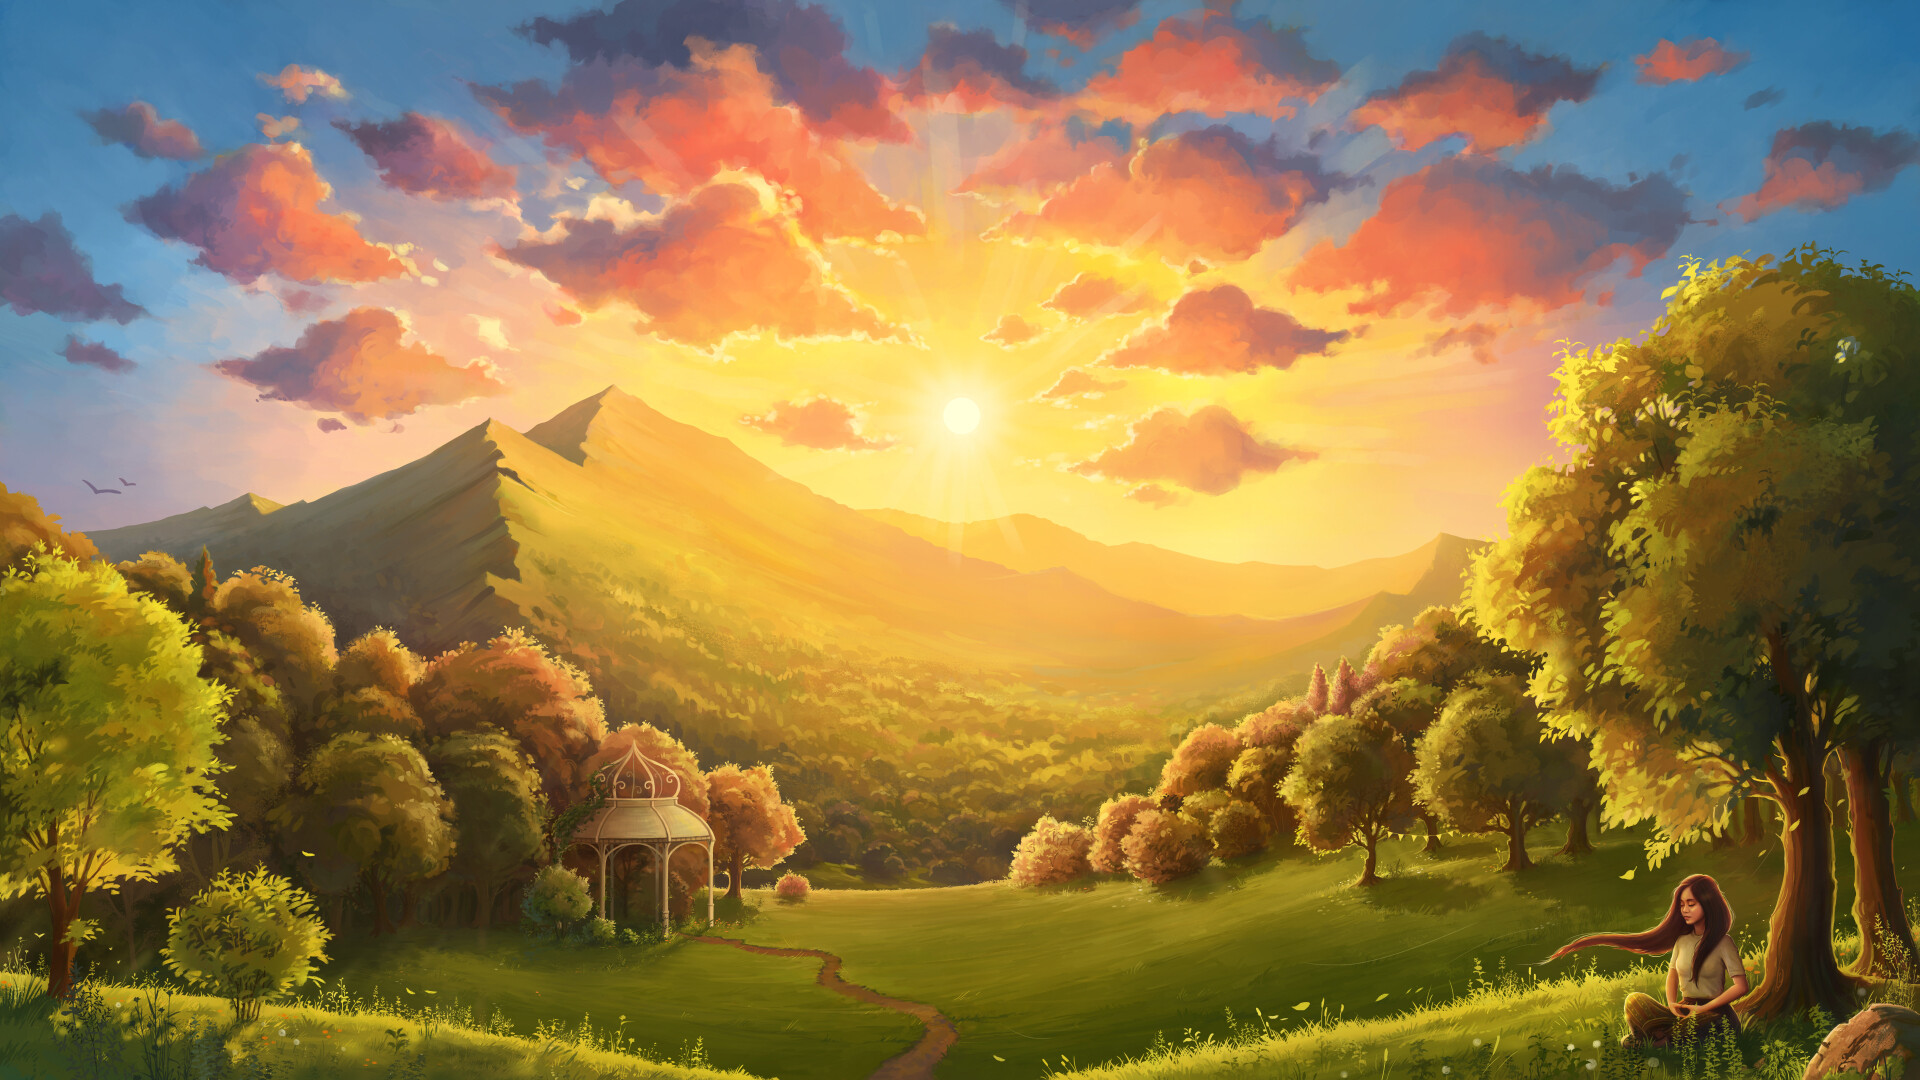 ArtStation - Sunset mountains | background